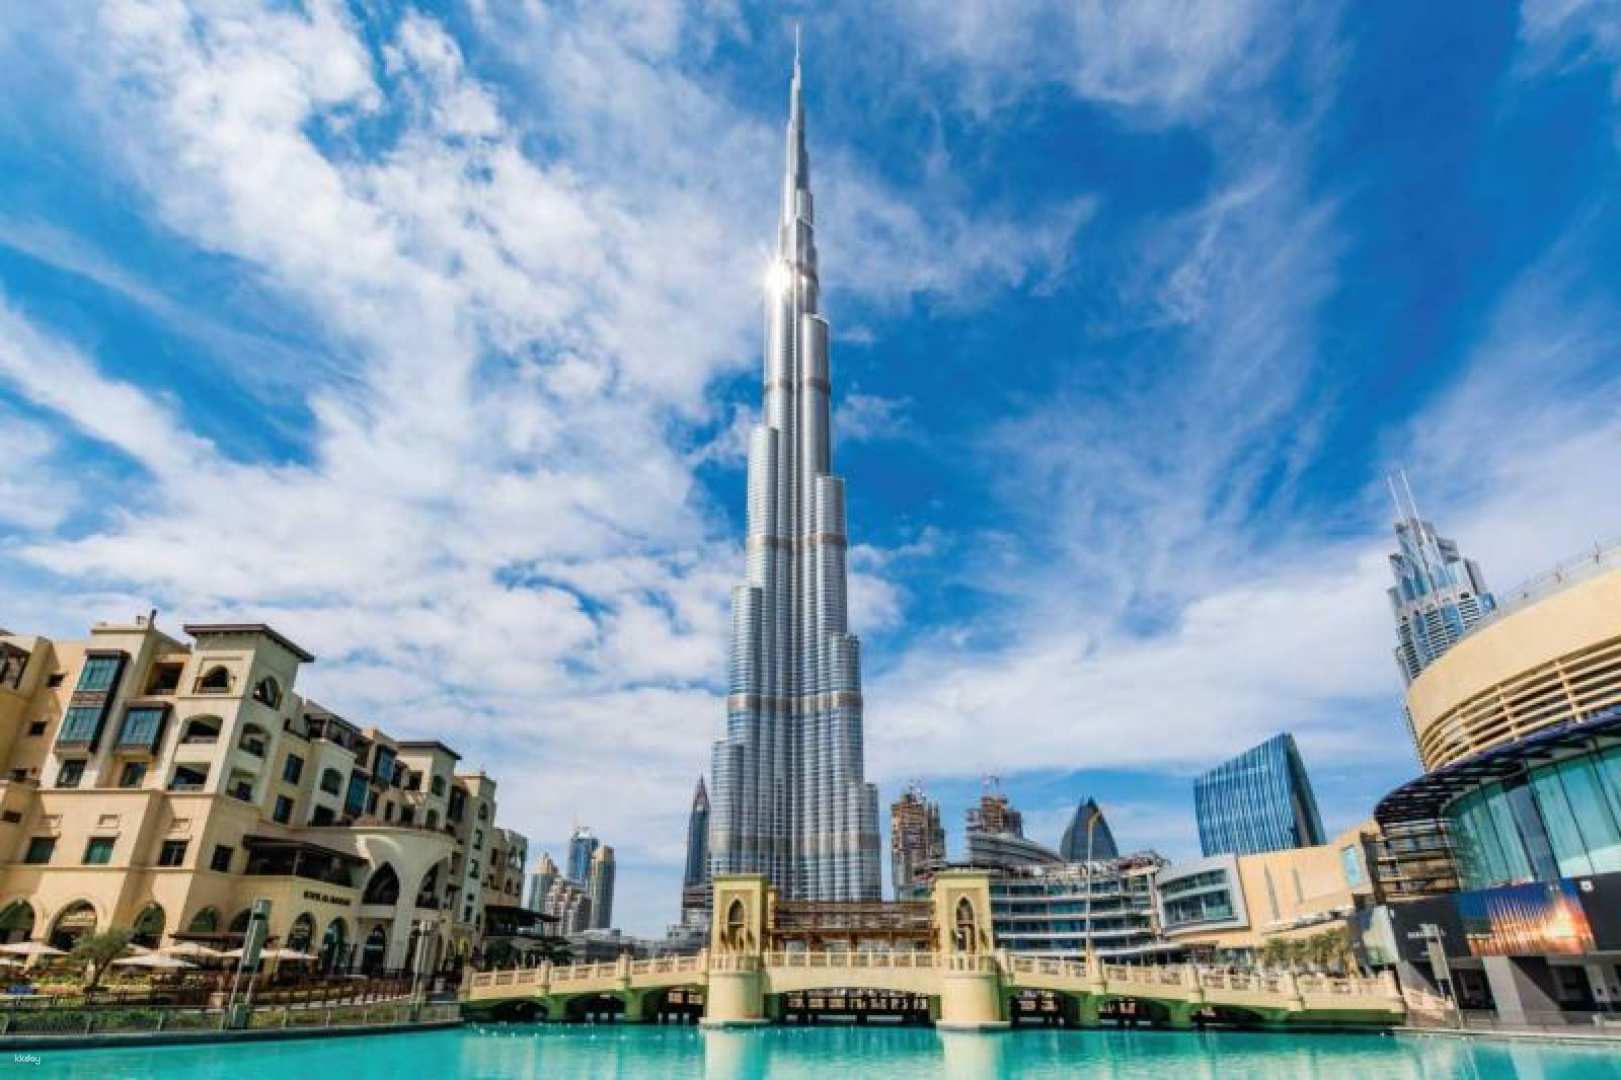 Dubai, UAE – Burj Khalifa and Palm Jumeirah